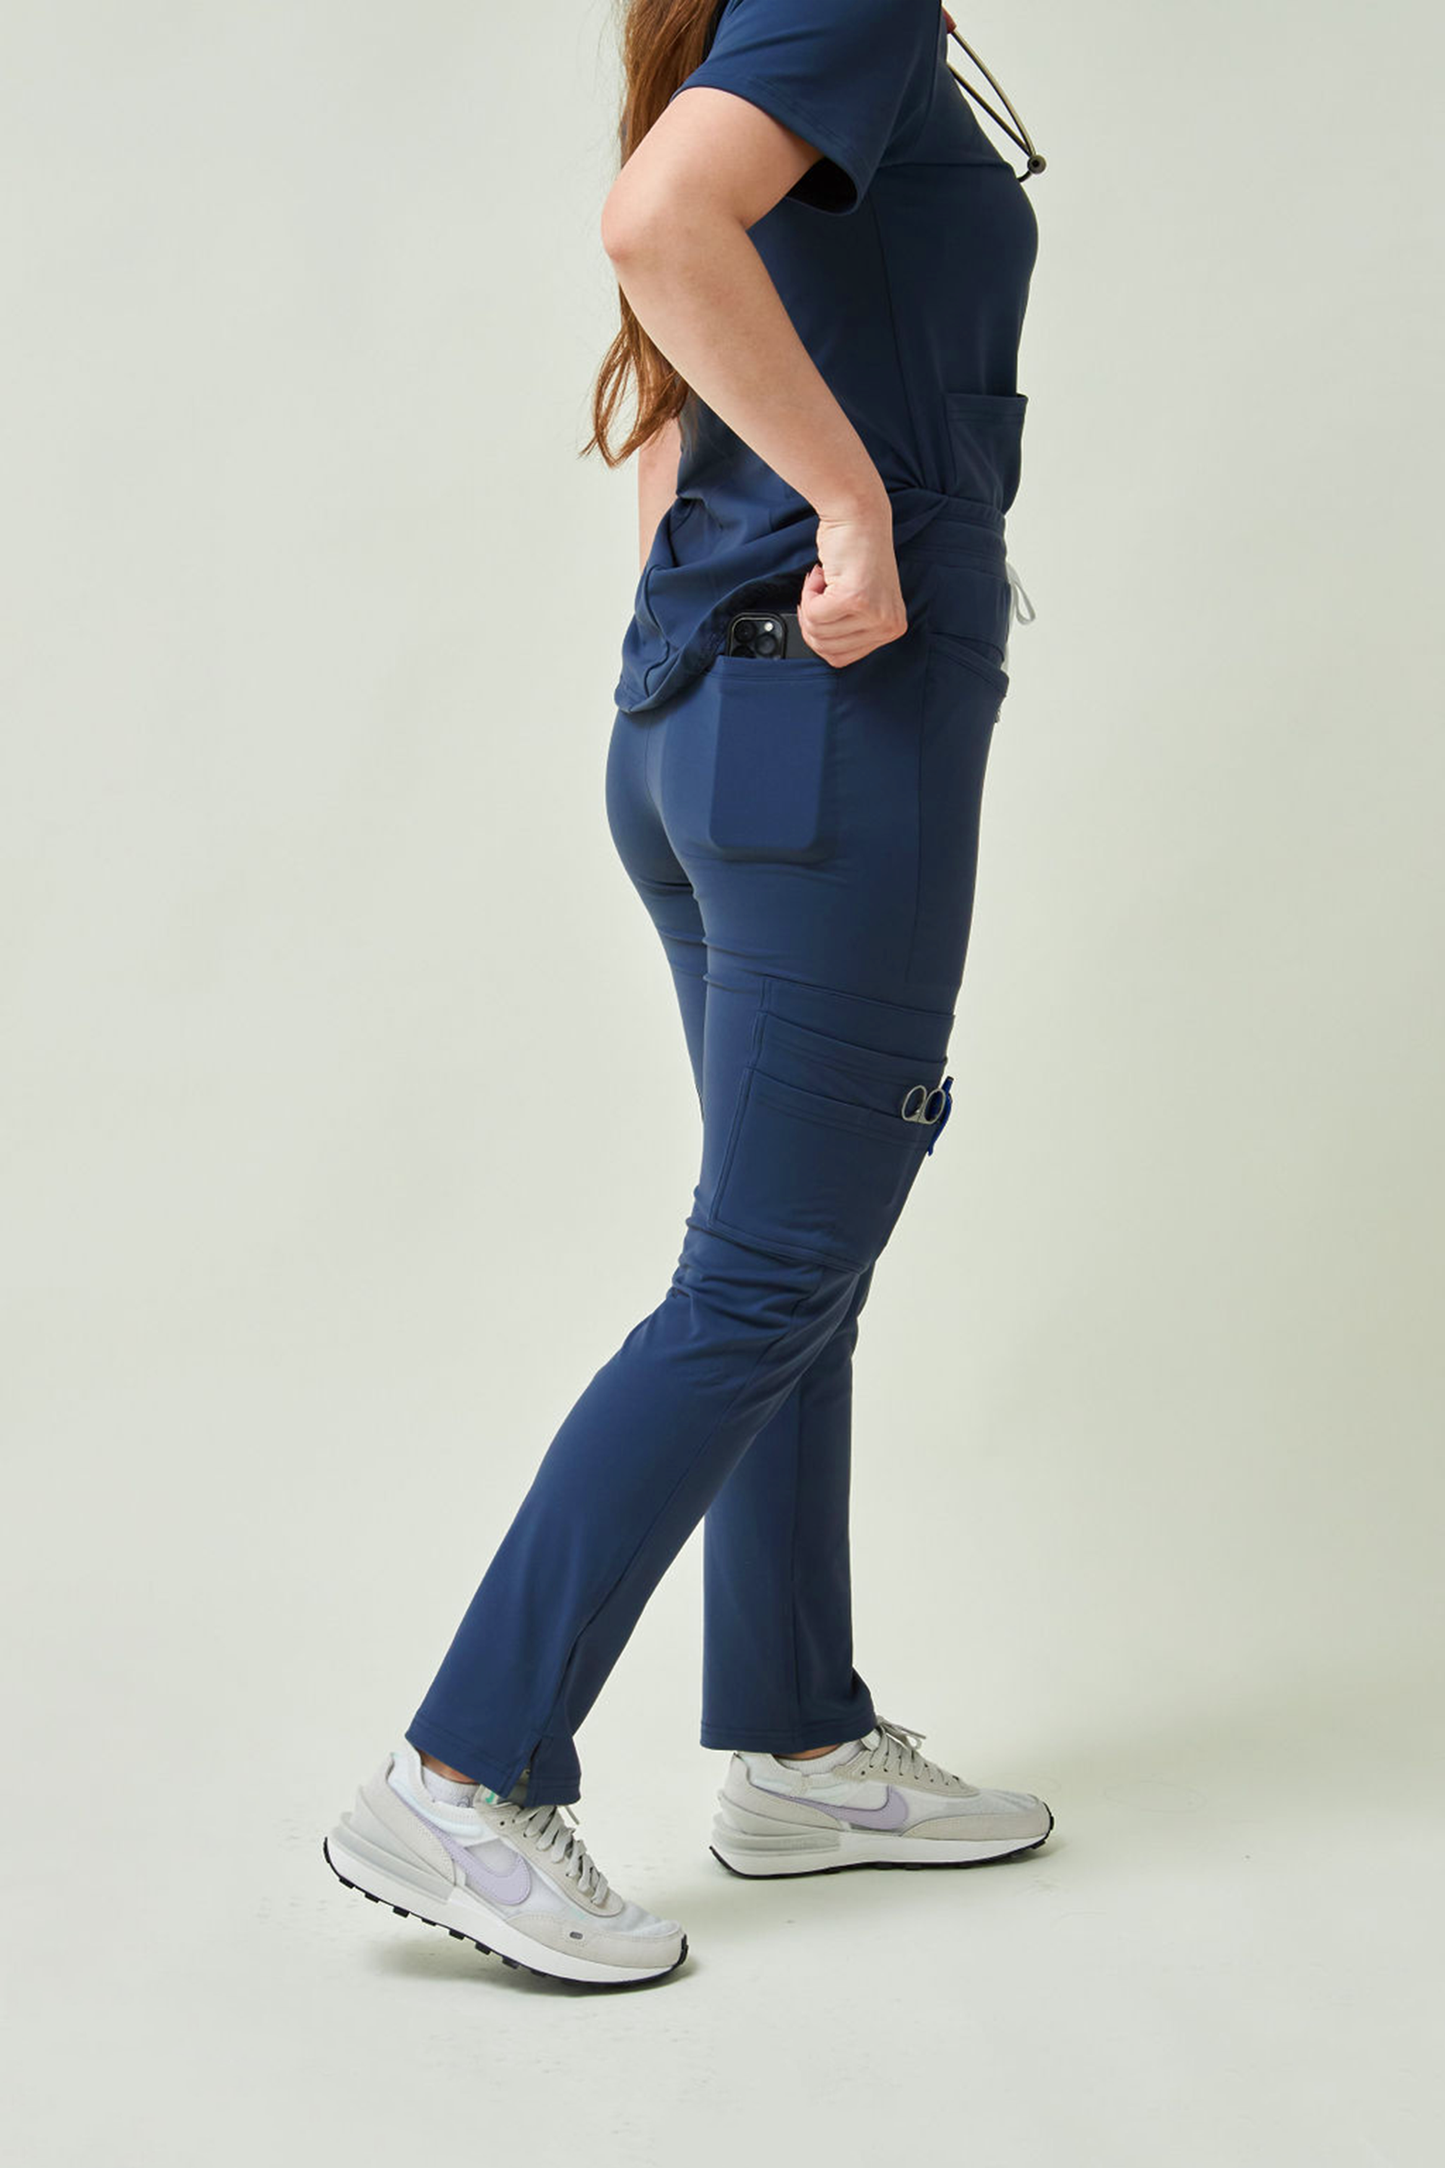 Slade 8-Pockets Straight Pants - Petite Length